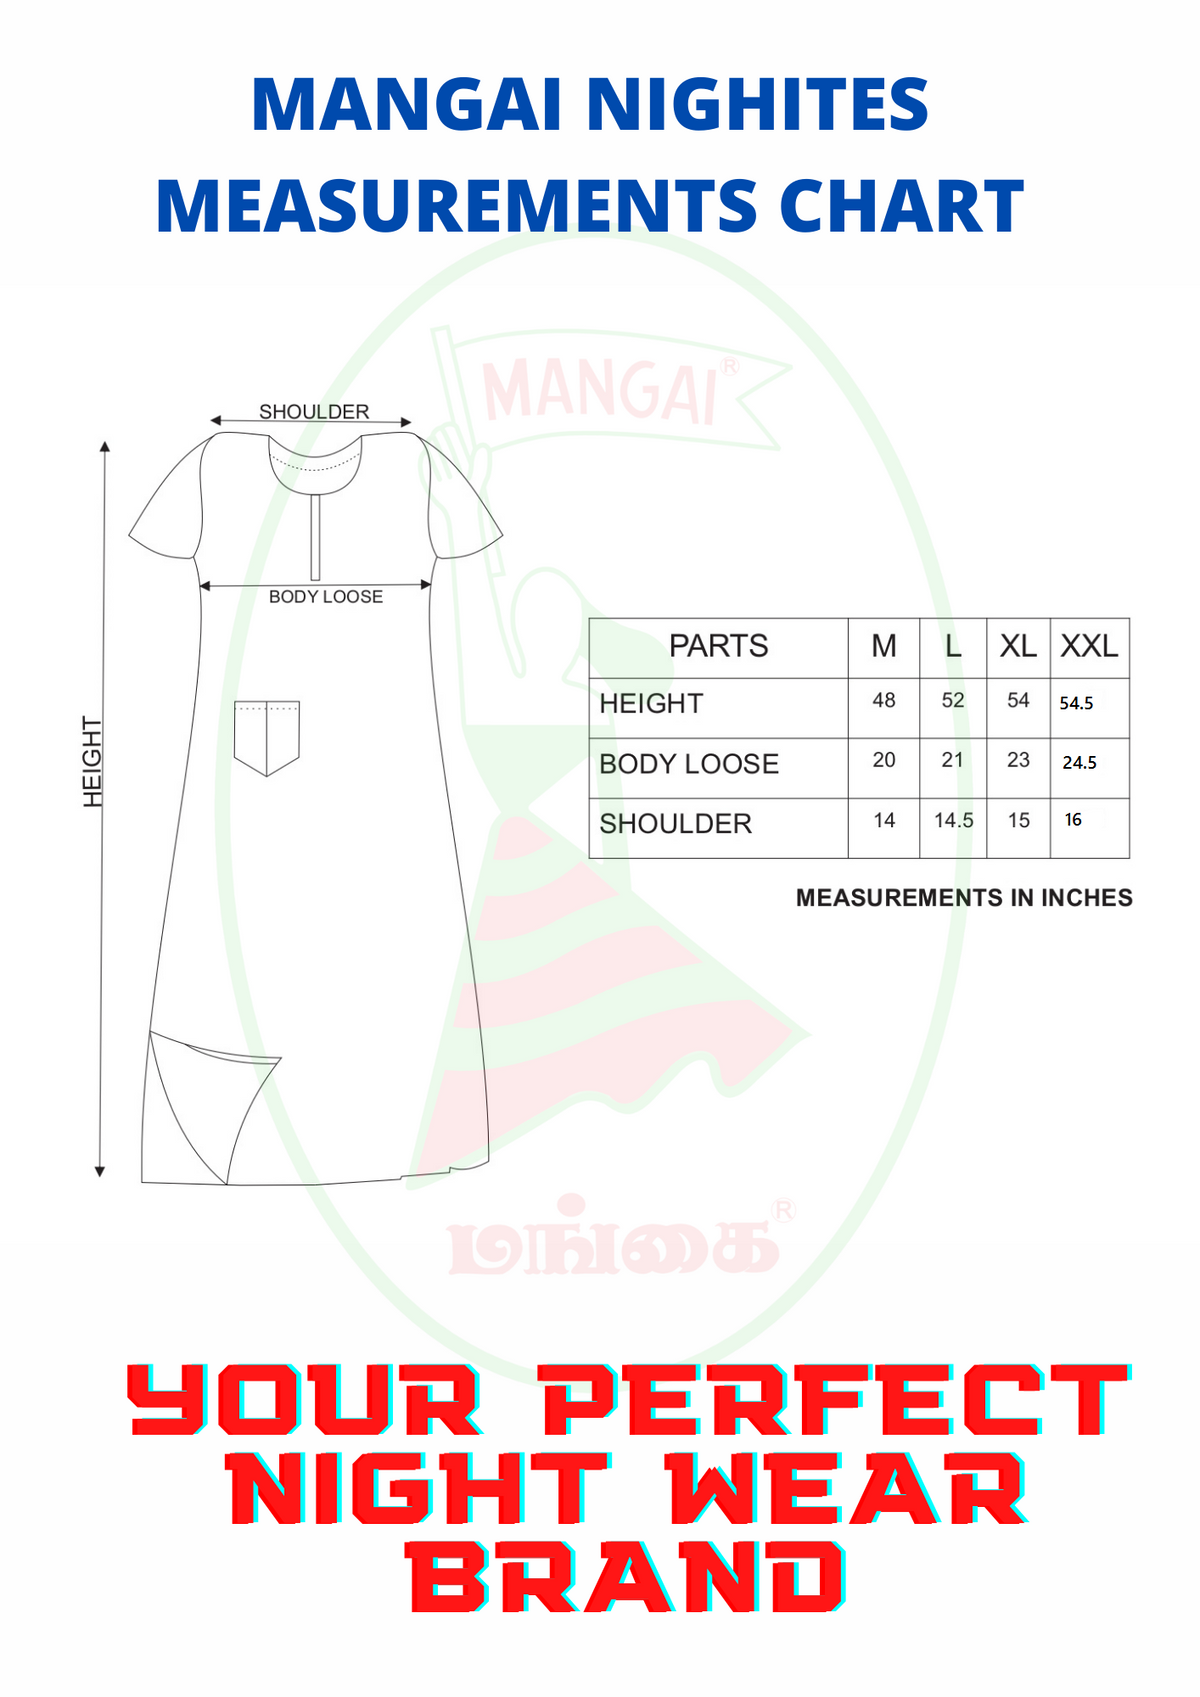 New MANGAI Premium Cotton Printed Nighties- All Over Printed Stylish Nightwear for Stylish Women | Updated Design's